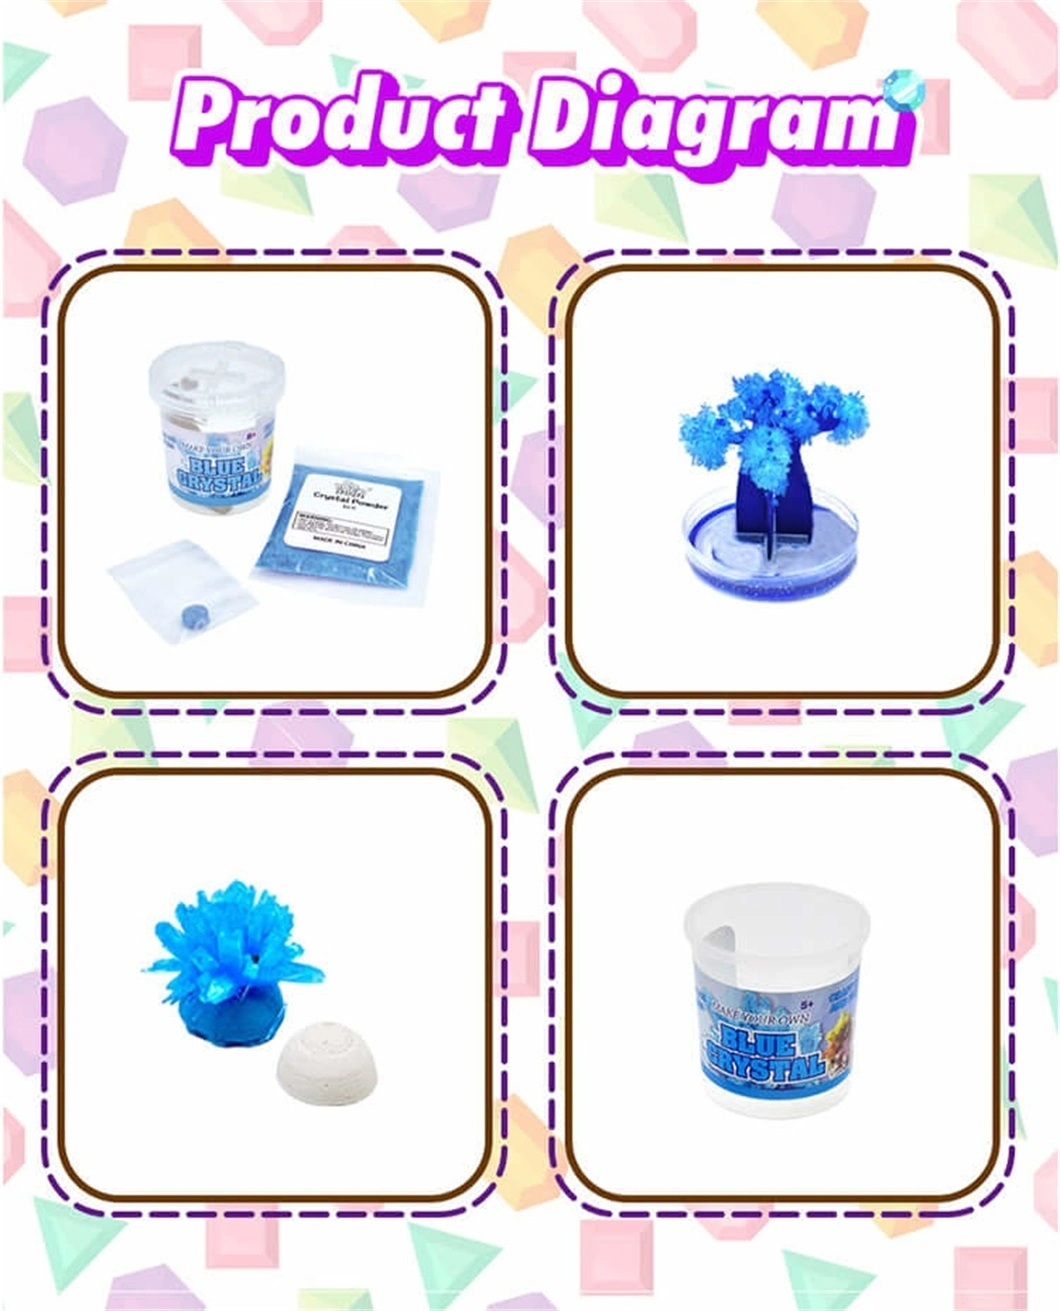 DIY Stem blue Educational Crystal Growing Kit for Kids